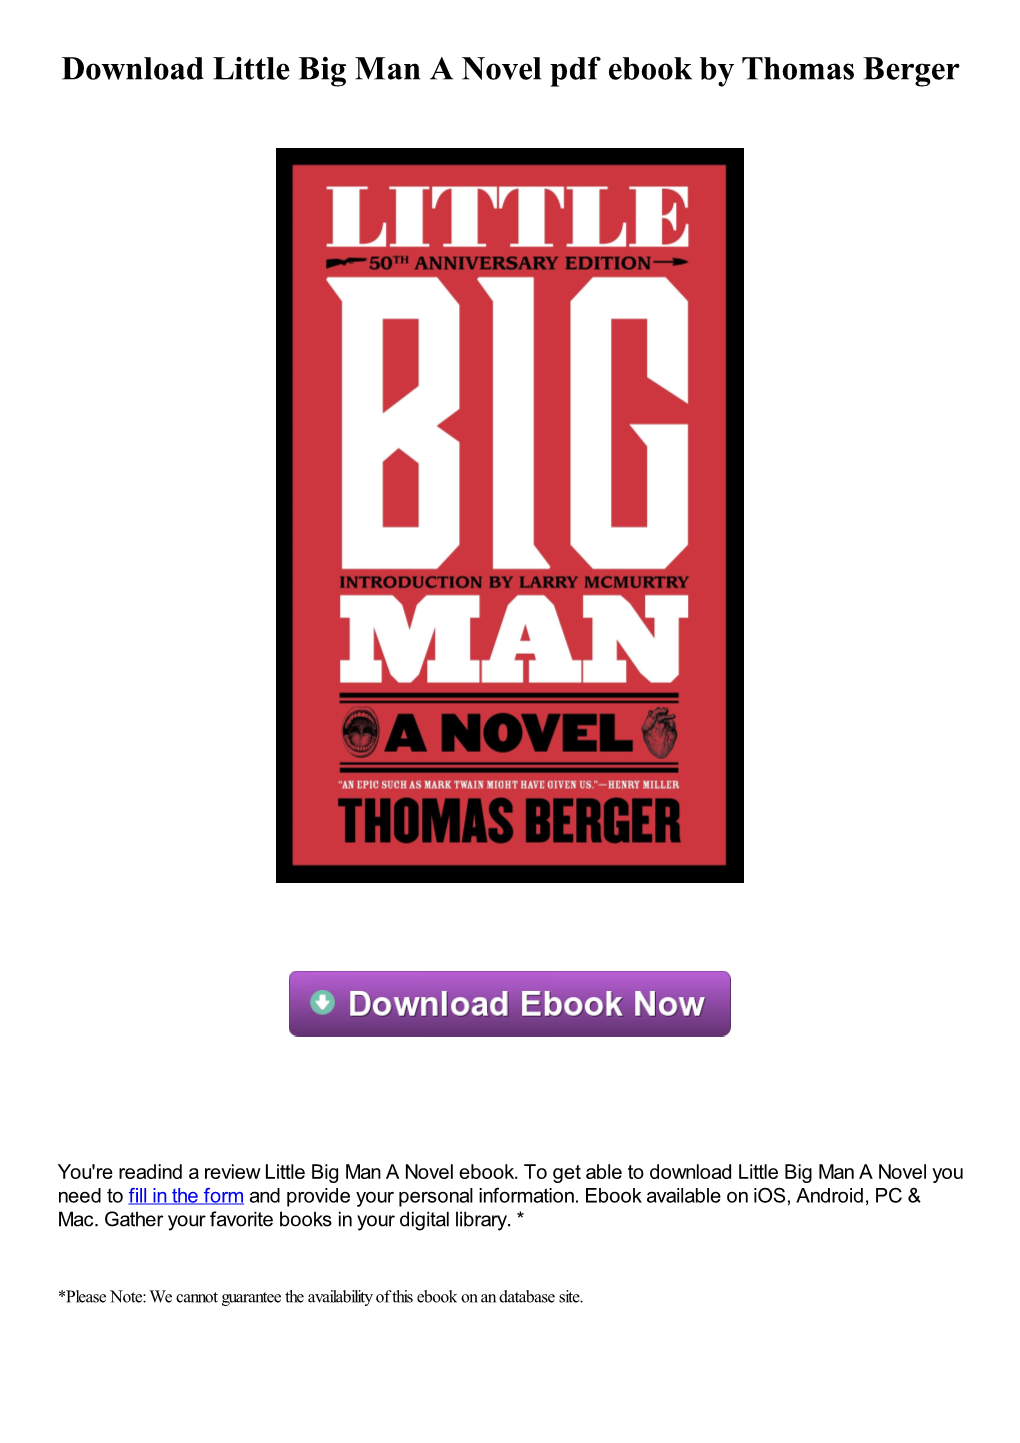 Download Little Big Man a Novel Pdf Ebook by Thomas Berger